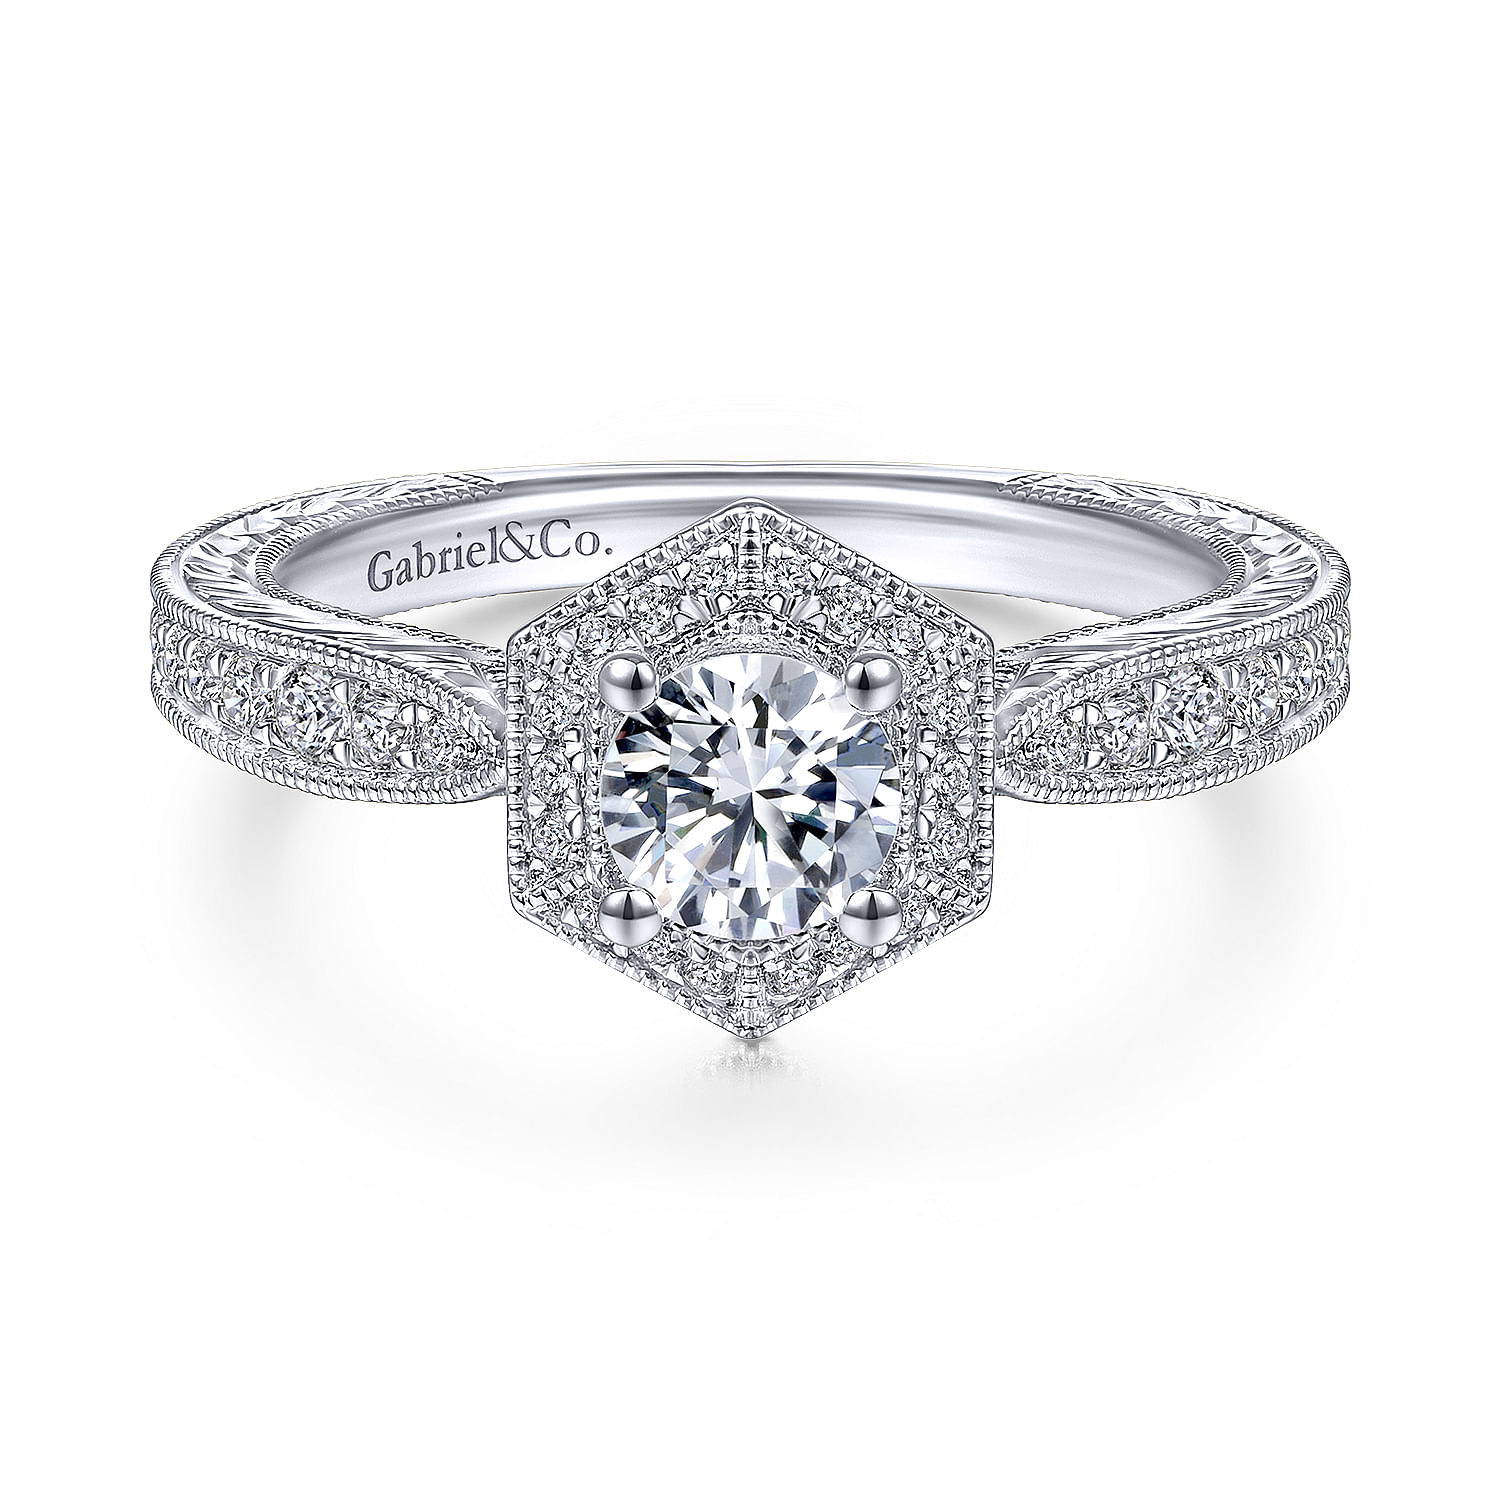 Newport - Art Deco 14K White Gold Octagonal Halo Round Diamond Engagement Ring